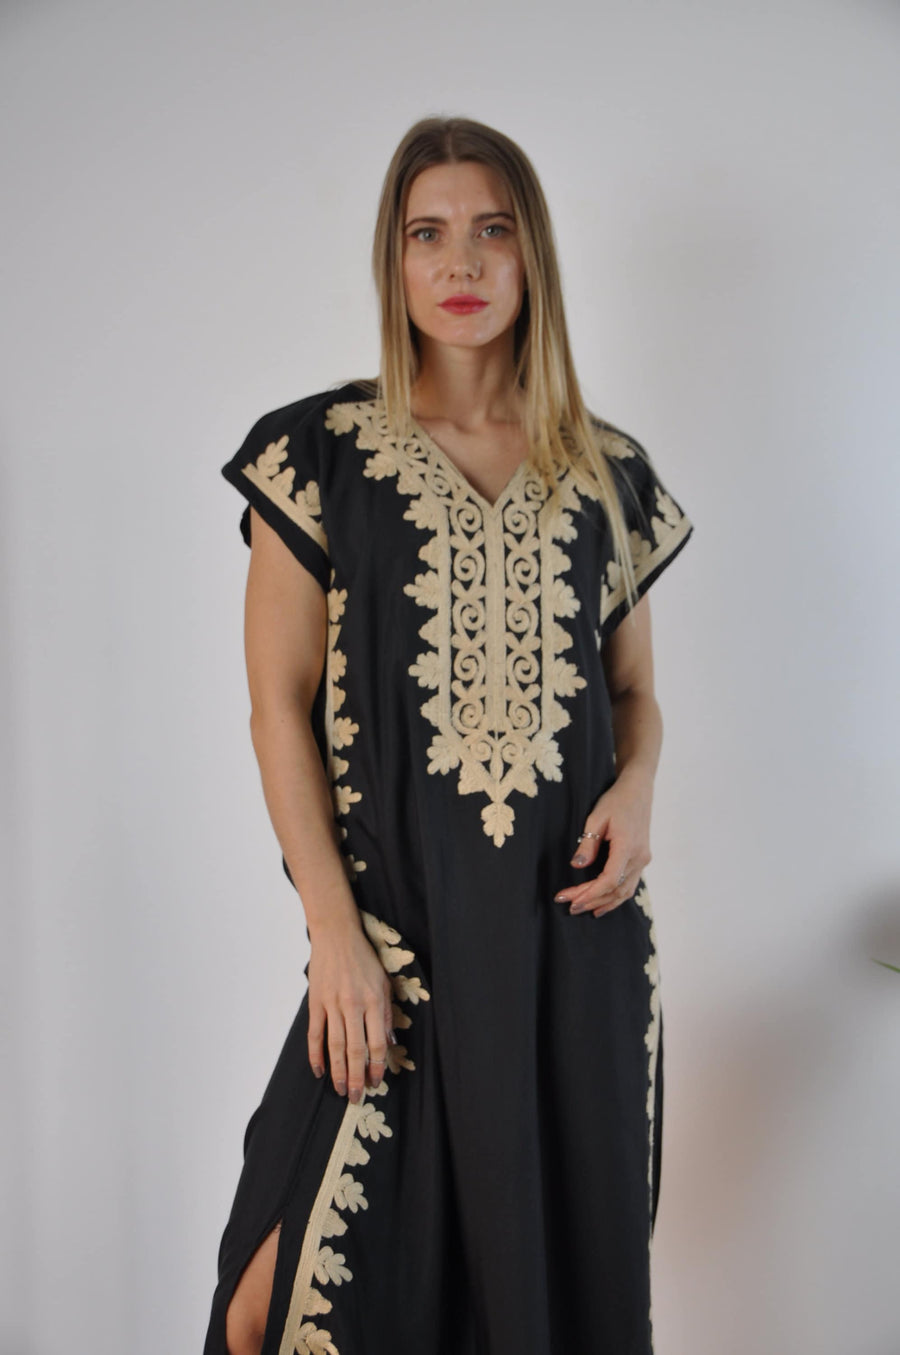 Open slit Elegant Black evening maxi dress, Bohemian Kaftan. Summer night out, Elegant evening gown, Egyptian cotton.